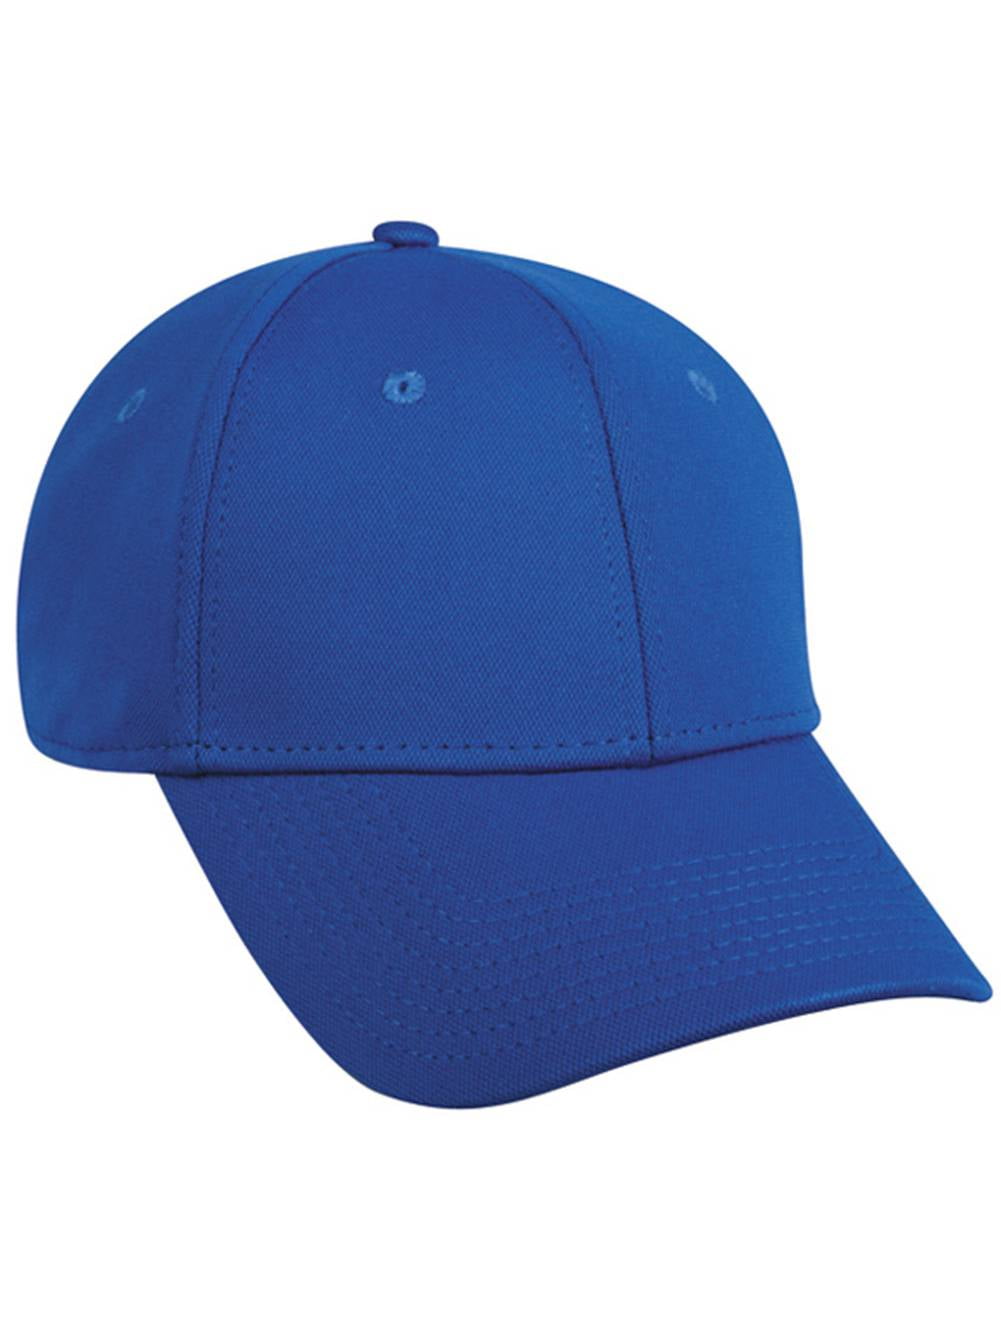 Flex Fitted Baseball Cap Hat   Royal Blue, Small Medium